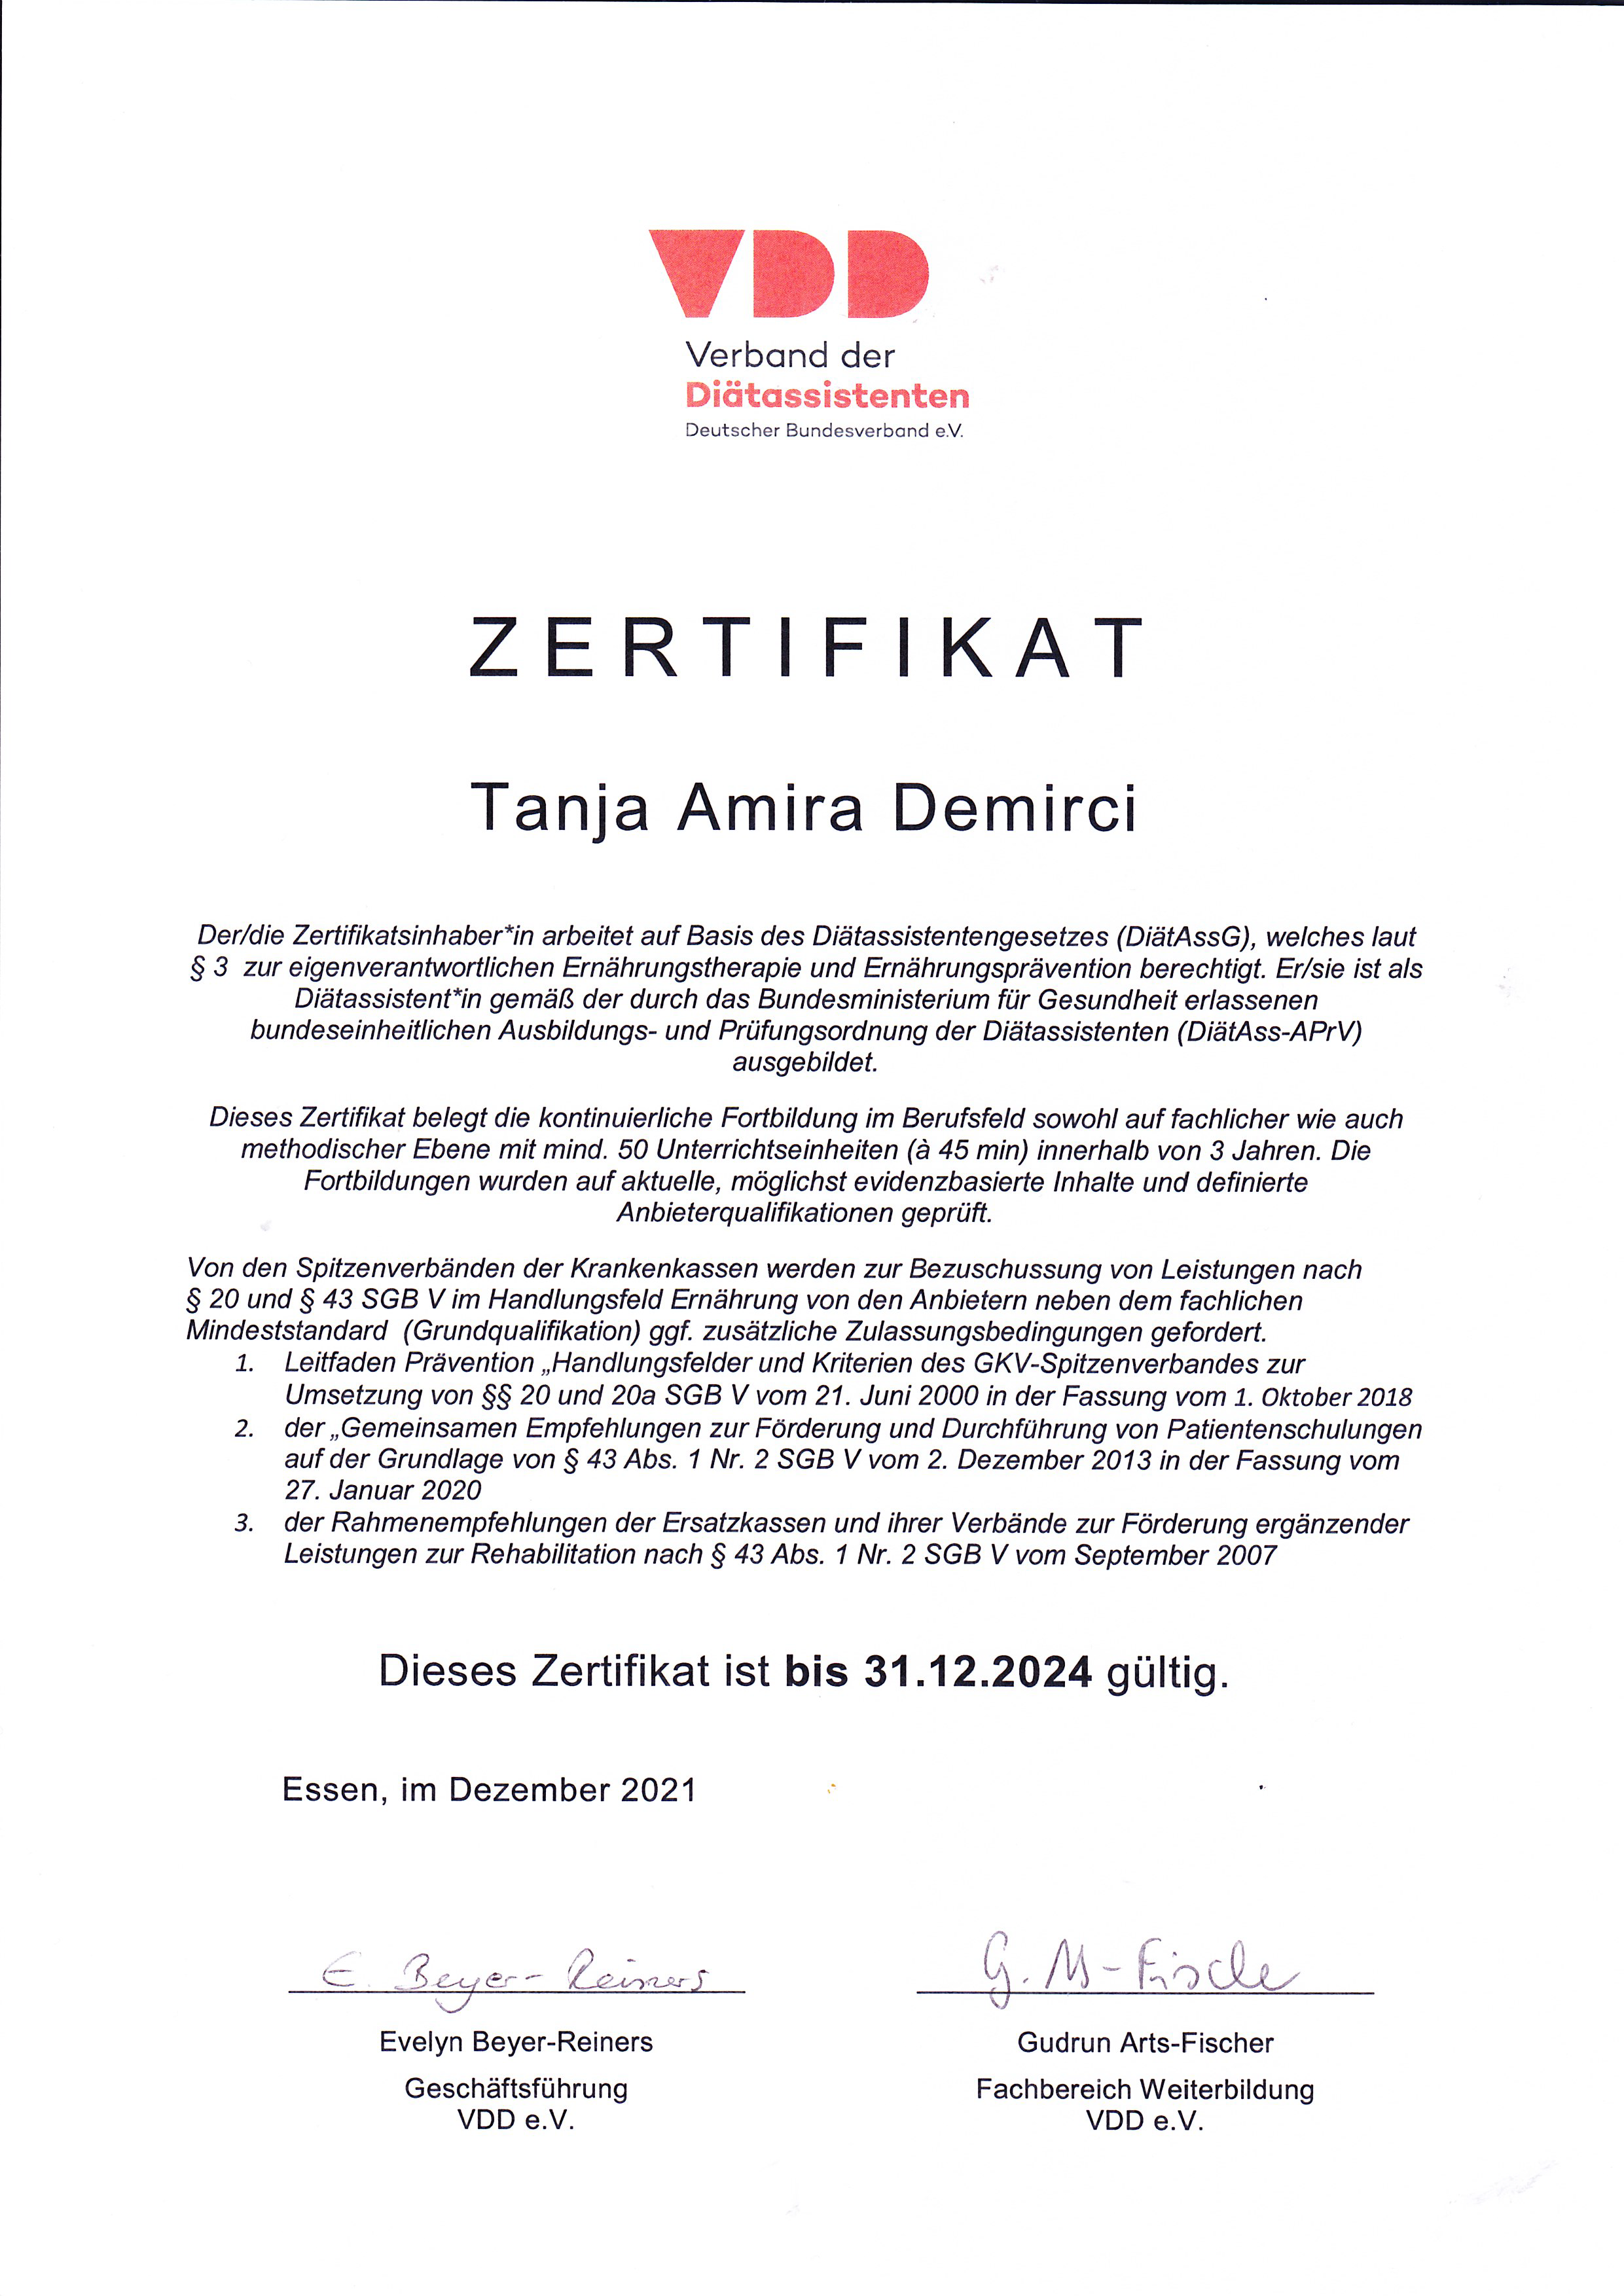 VDD_Zertifikat_Demirci_24